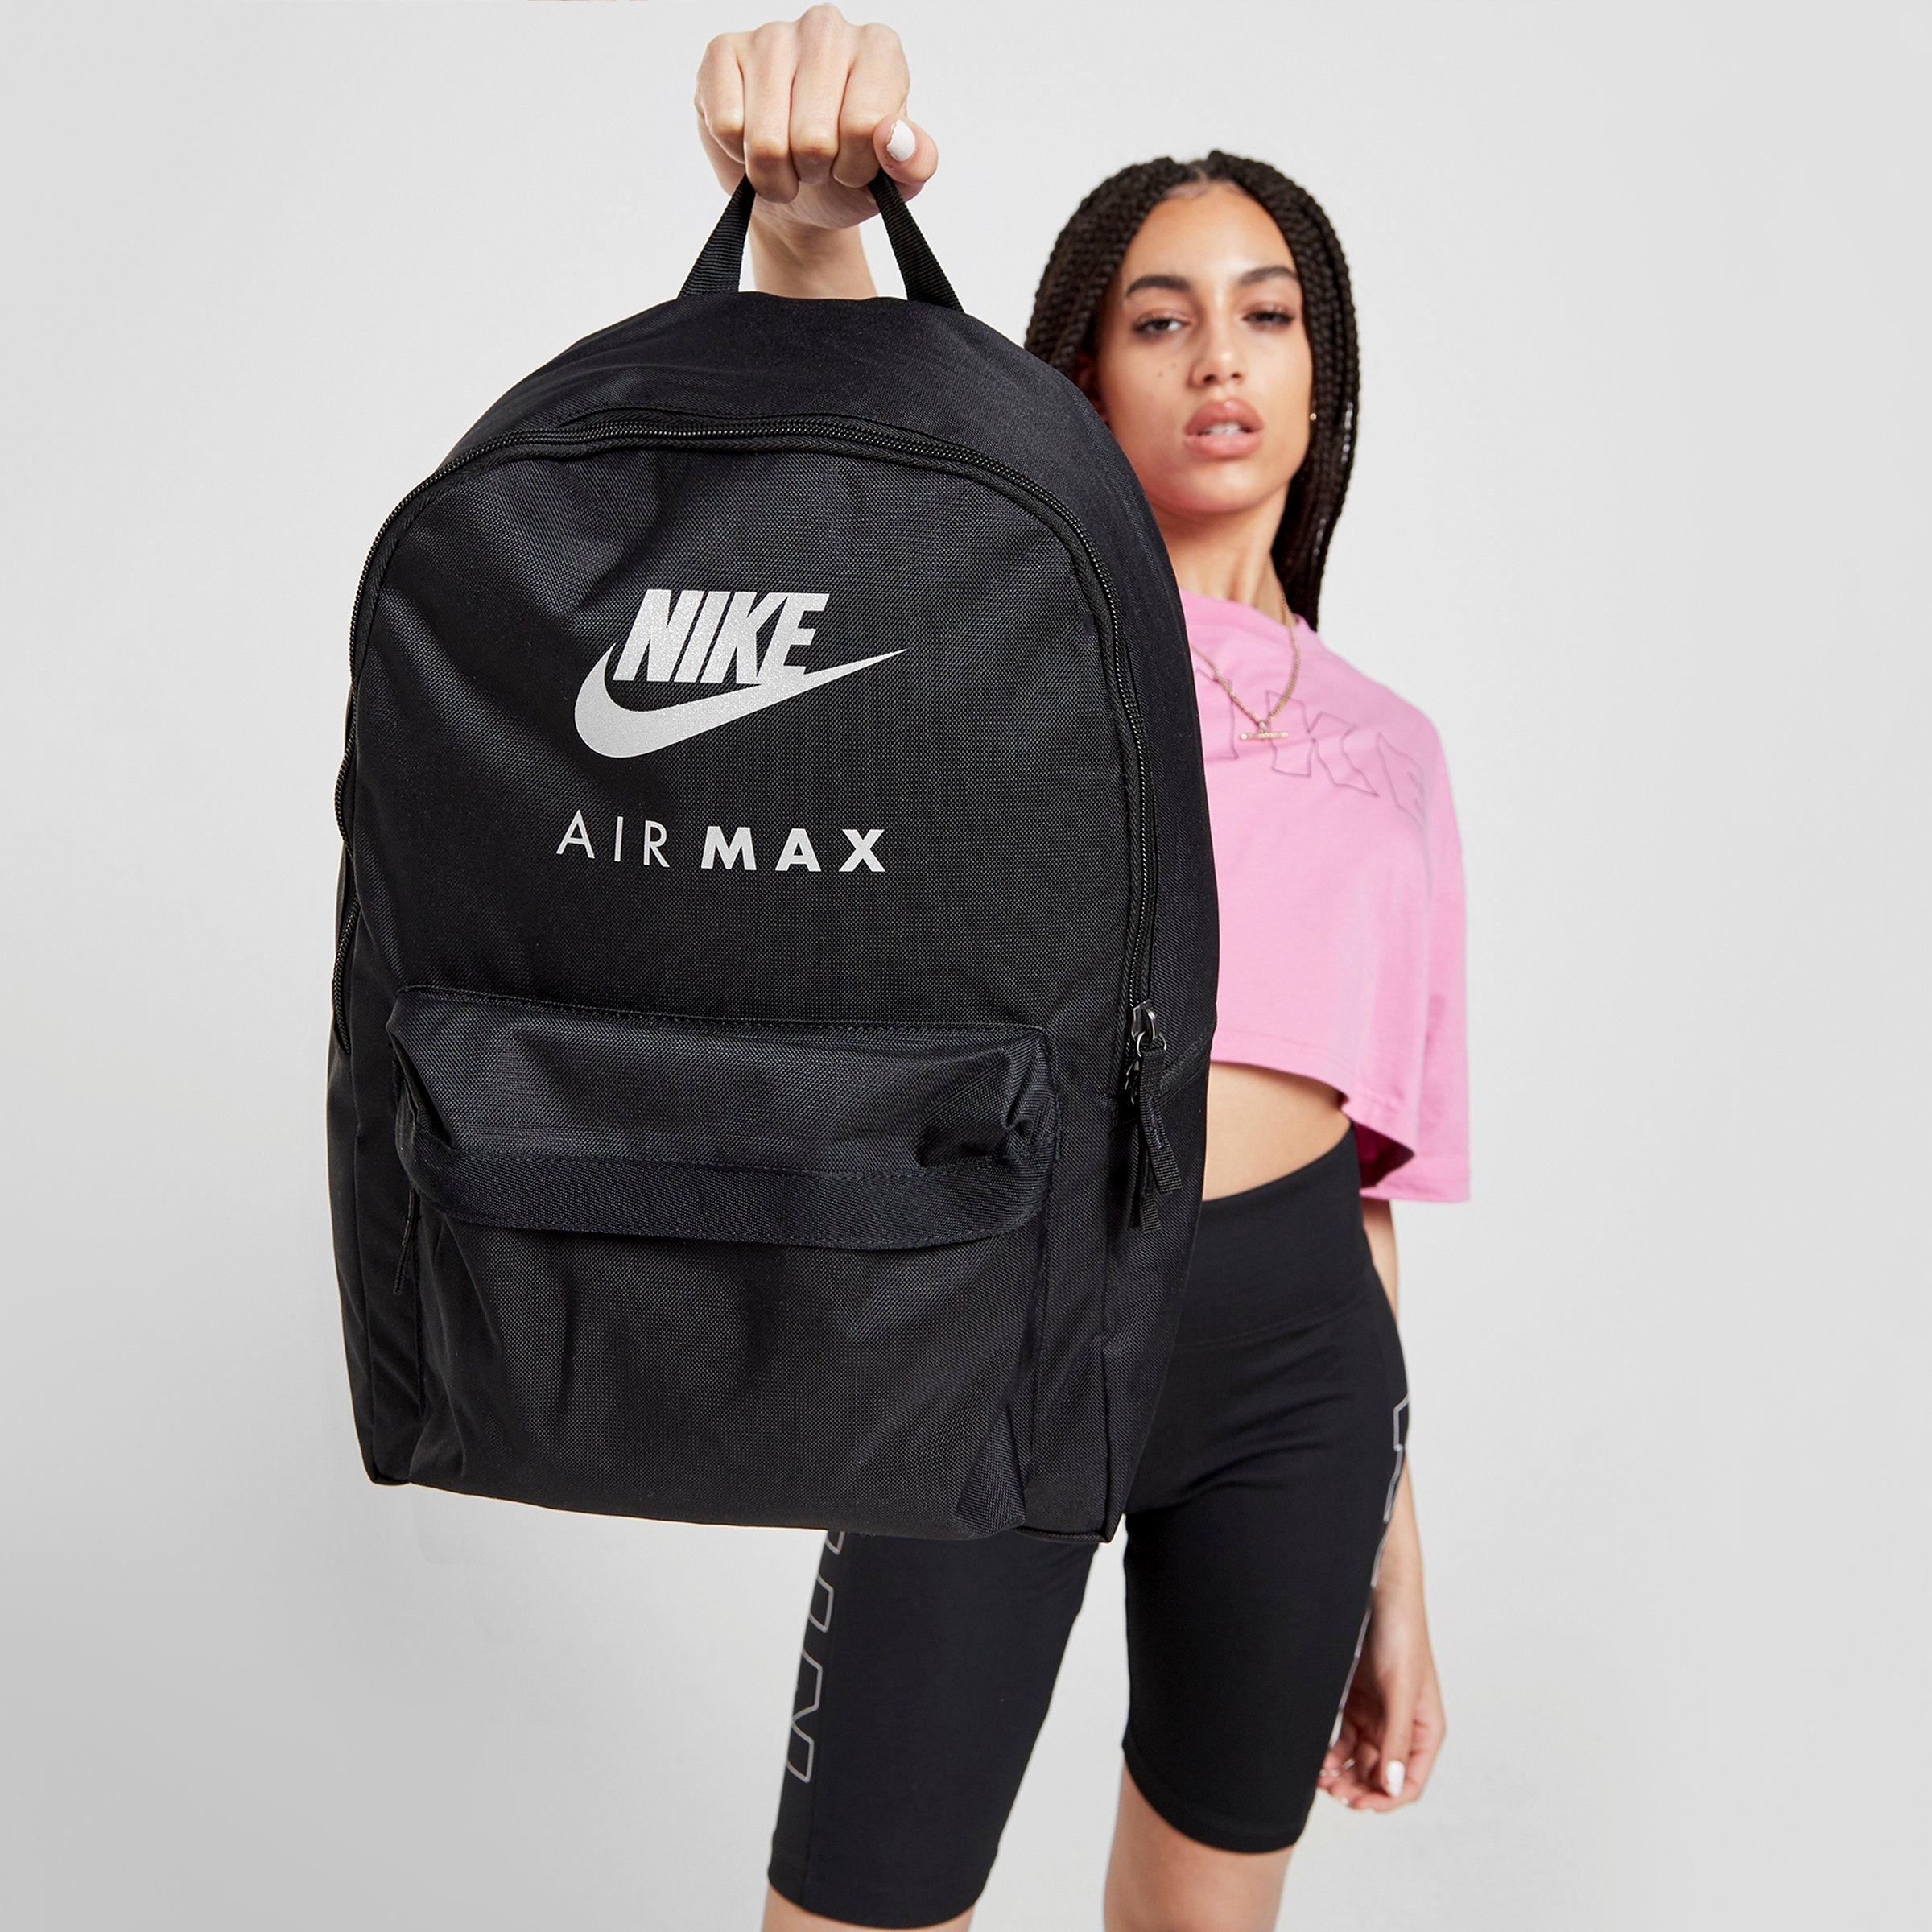 nike and adidas school bags